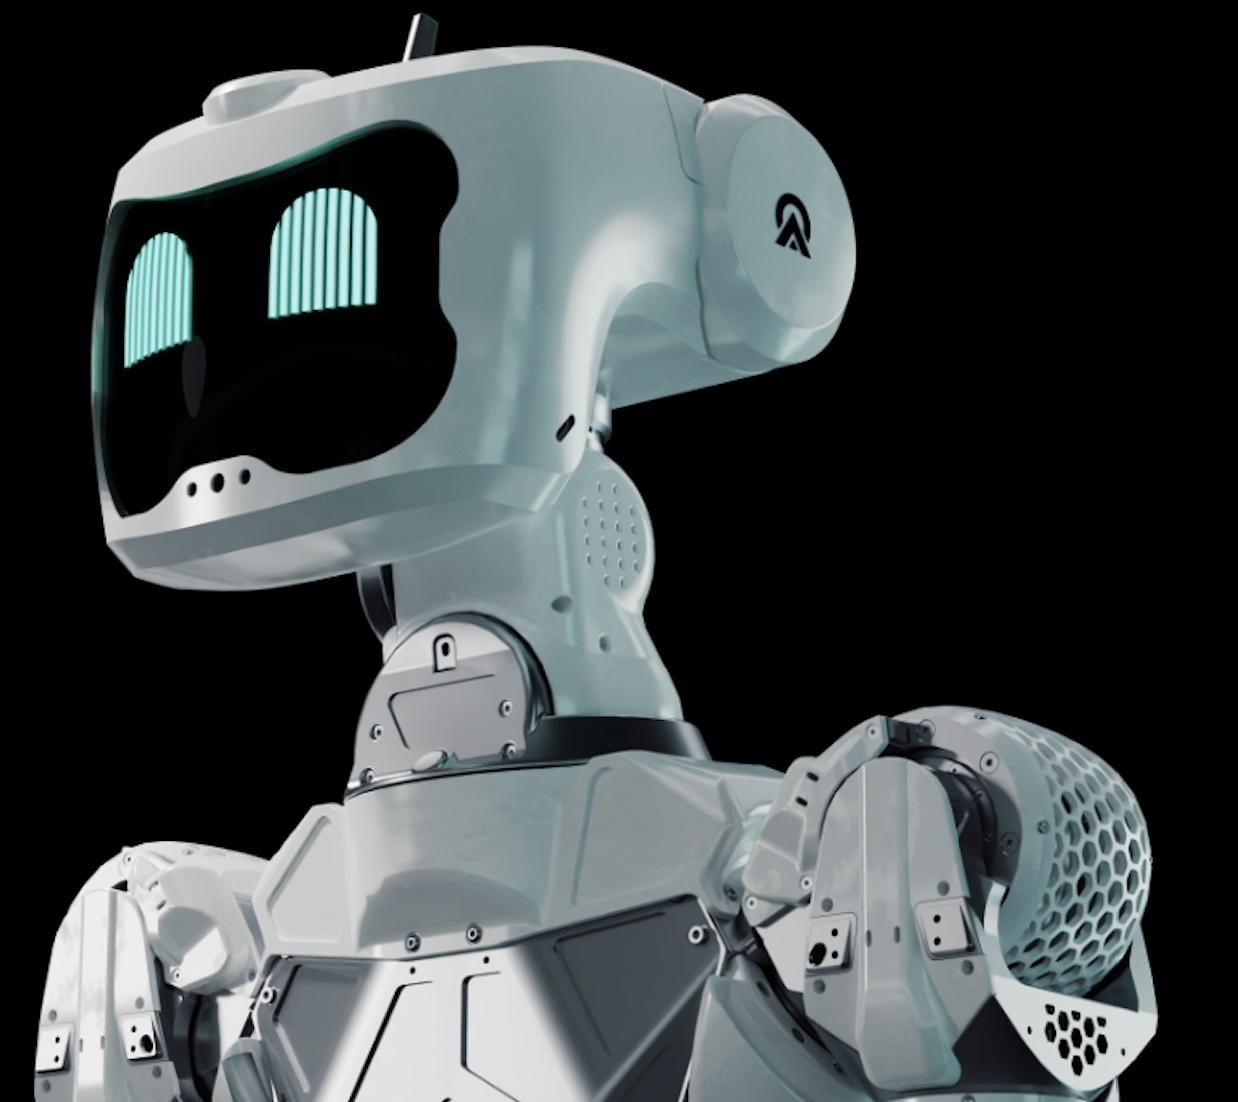 Apptronik readies its humanoid robot for a summer unveil | TechCrunch